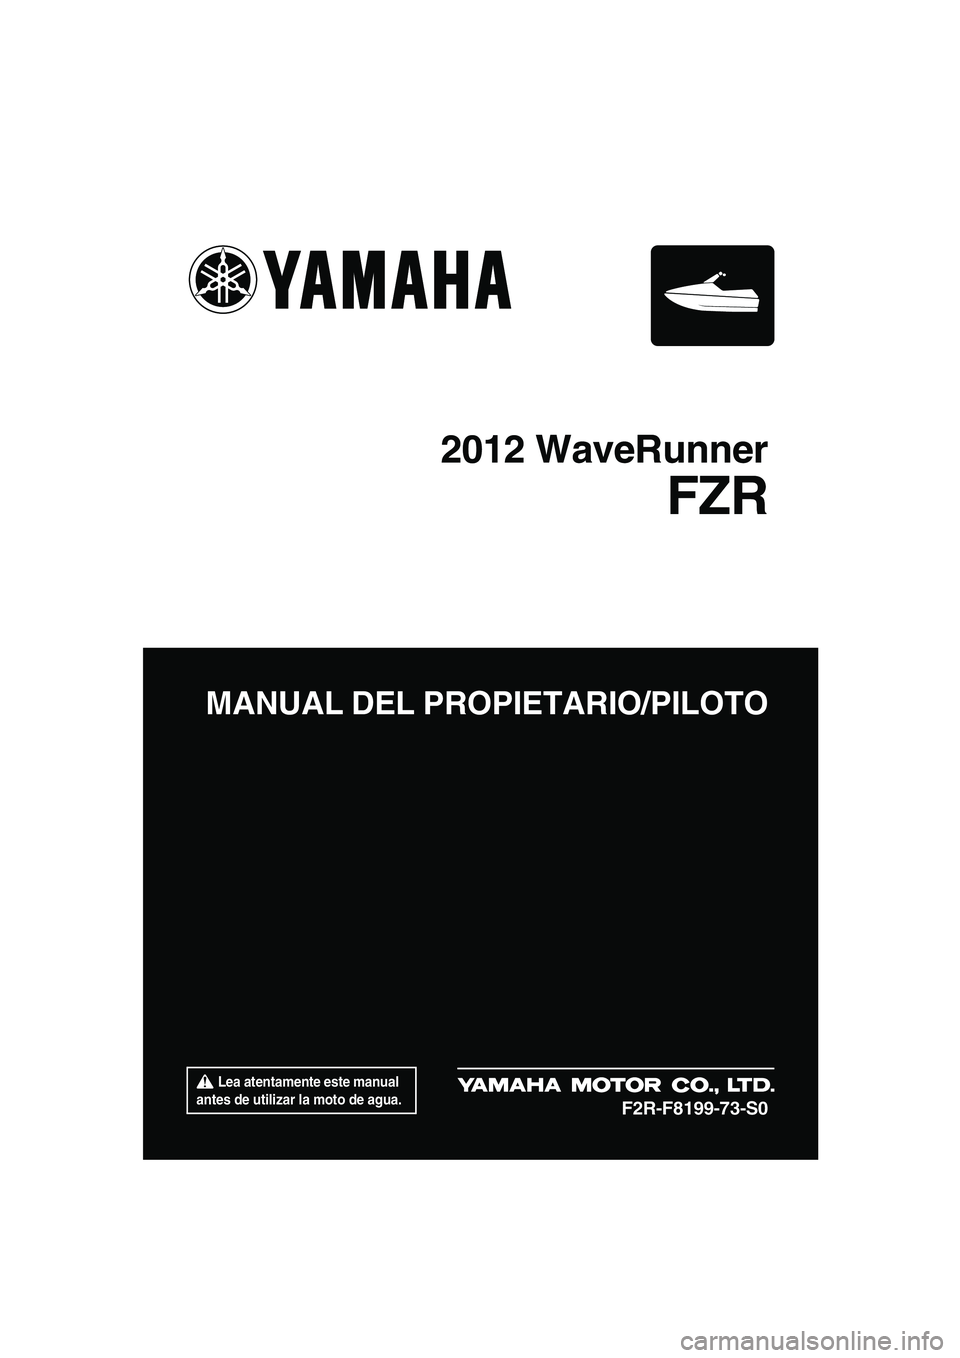 YAMAHA FZR SVHO 2012  Manuale de Empleo (in Spanish)  Lea atentamente este manual 
antes de utilizar la moto de agua.
MANUAL DEL PROPIETARIO/PILOTO
2012 WaveRunner
FZR
F2R-F8199-73-S0
UF2R73S0.book  Page 1  Wednesday, June 29, 2011  2:12 PM 